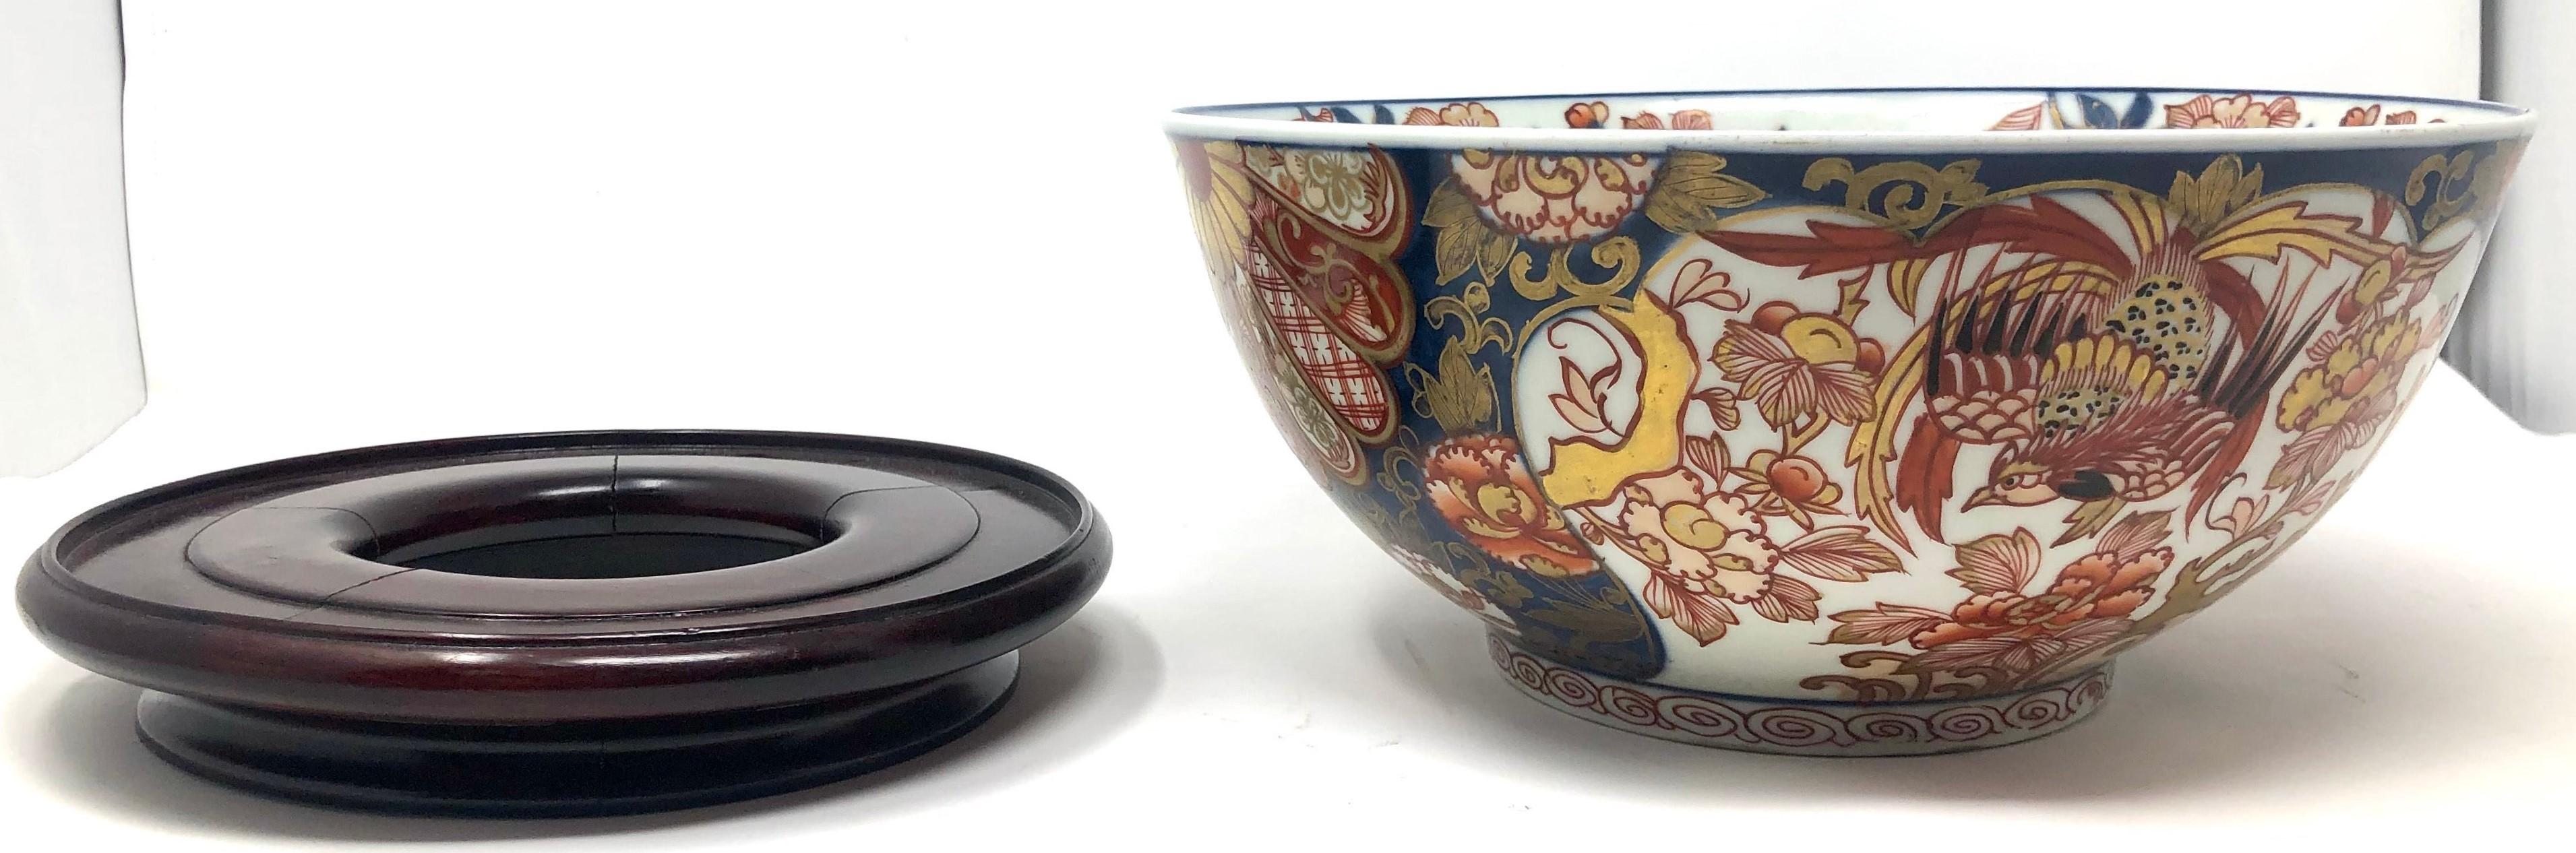 Antique Japanese Imari porcelain bowl on stand, Circa 1900.